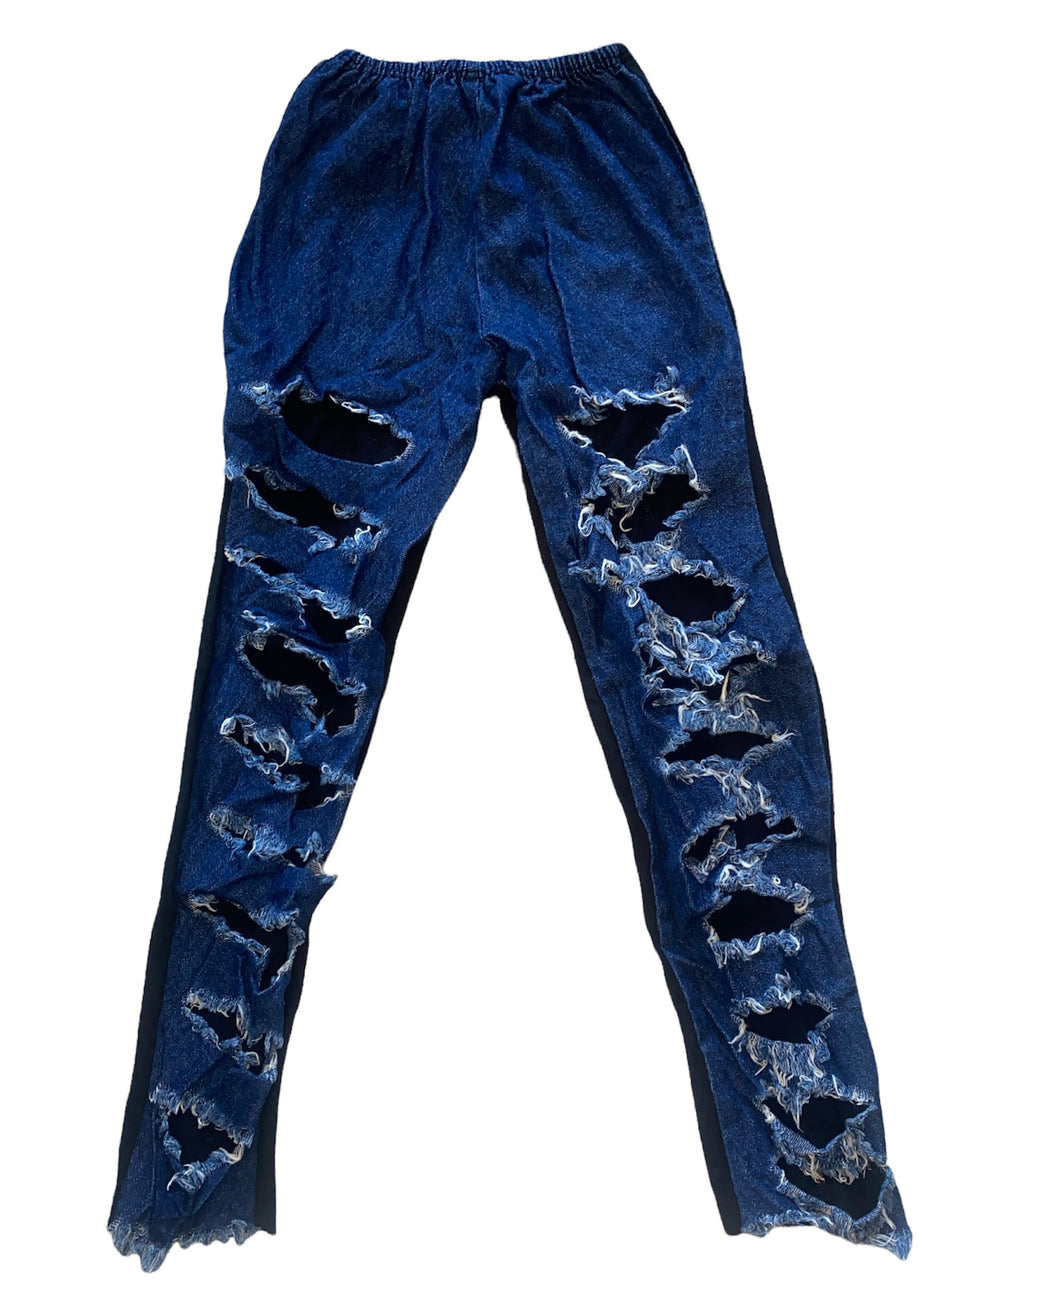 Hope Jeans girls slashed dark wash denim leggings 6